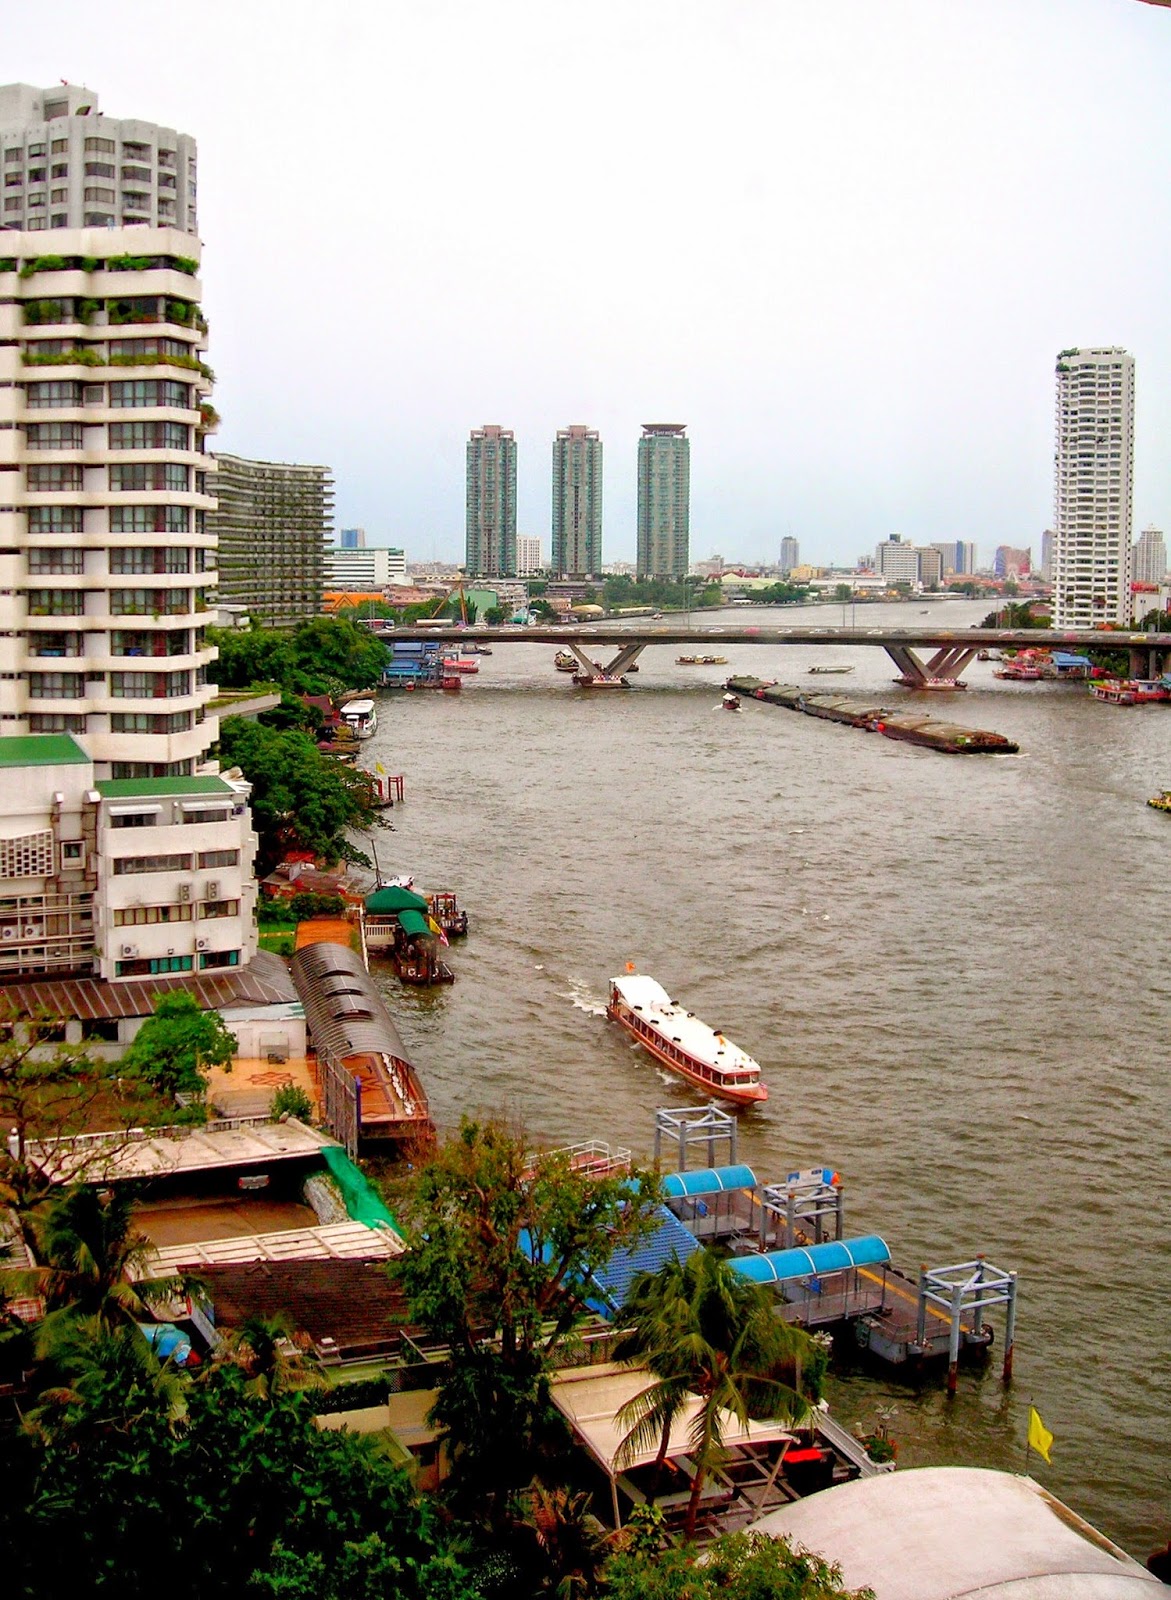 The Chao Phraya River flowing through the city of Bangkok 